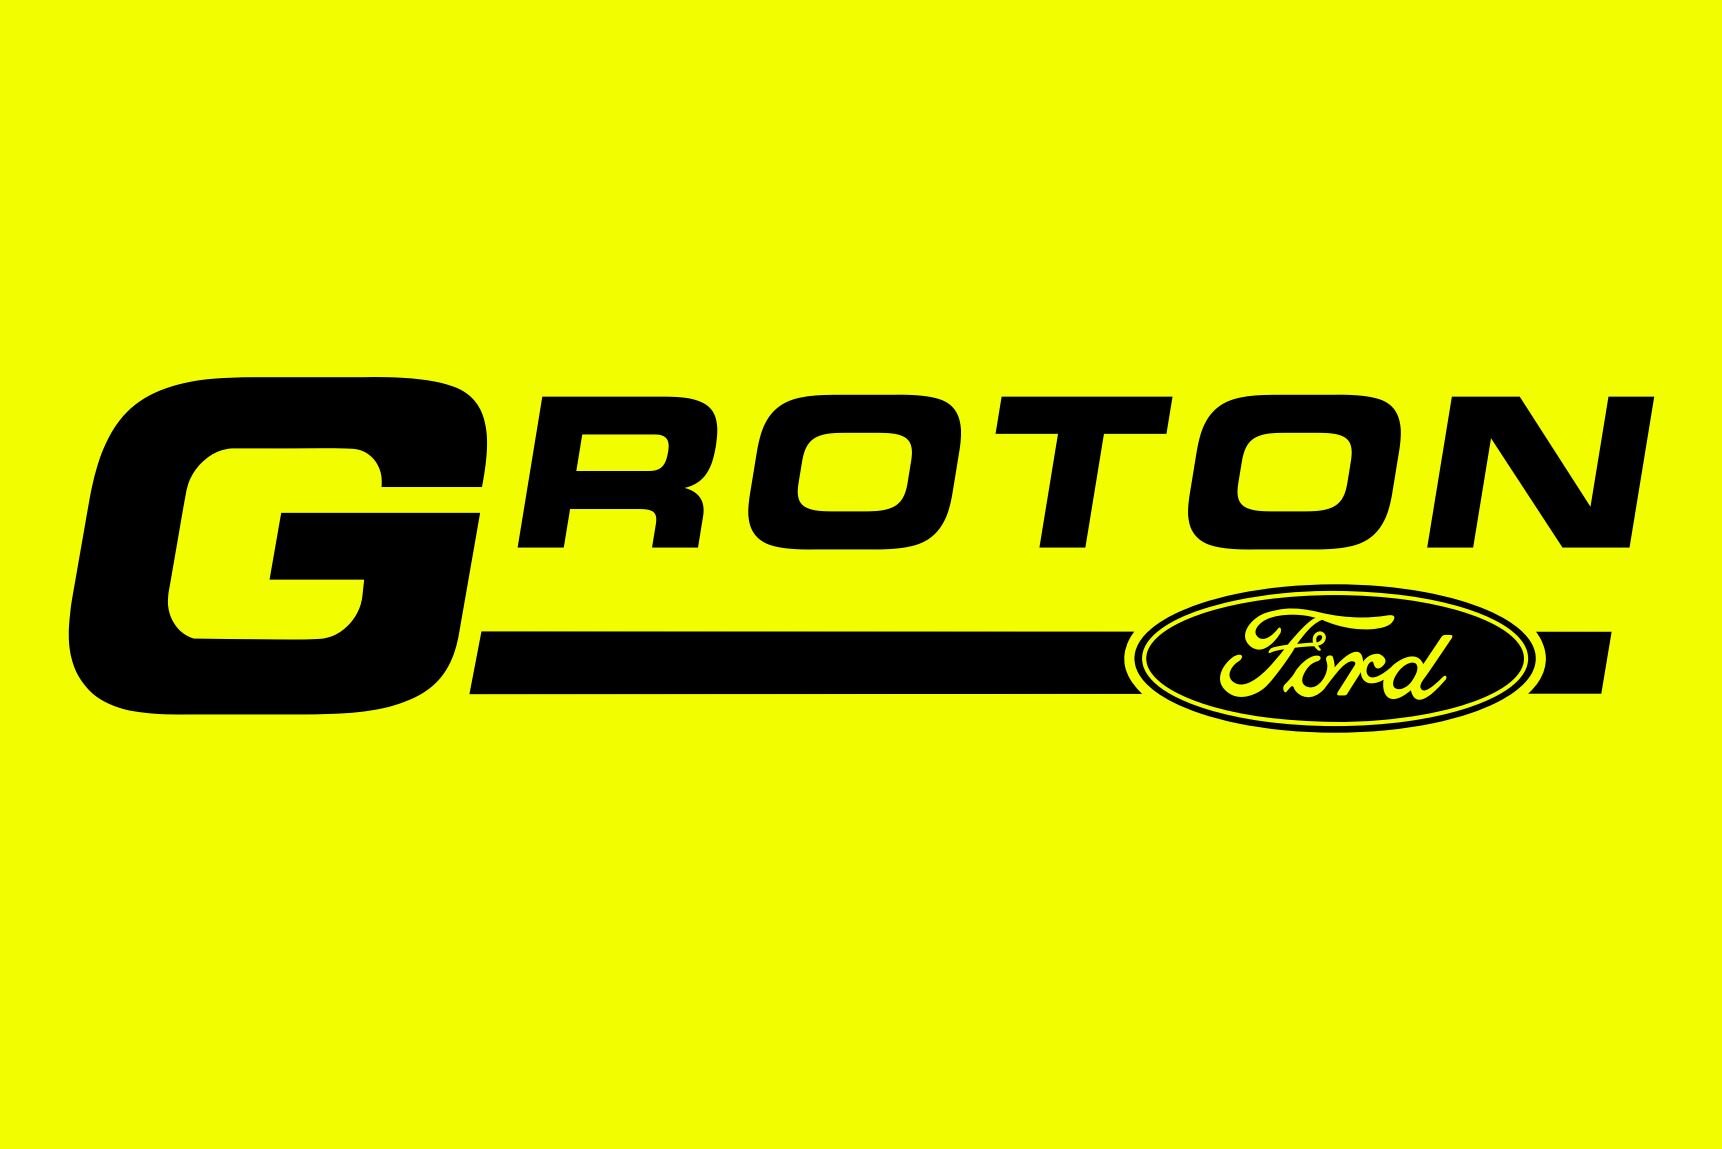 Groton Ford.JPG